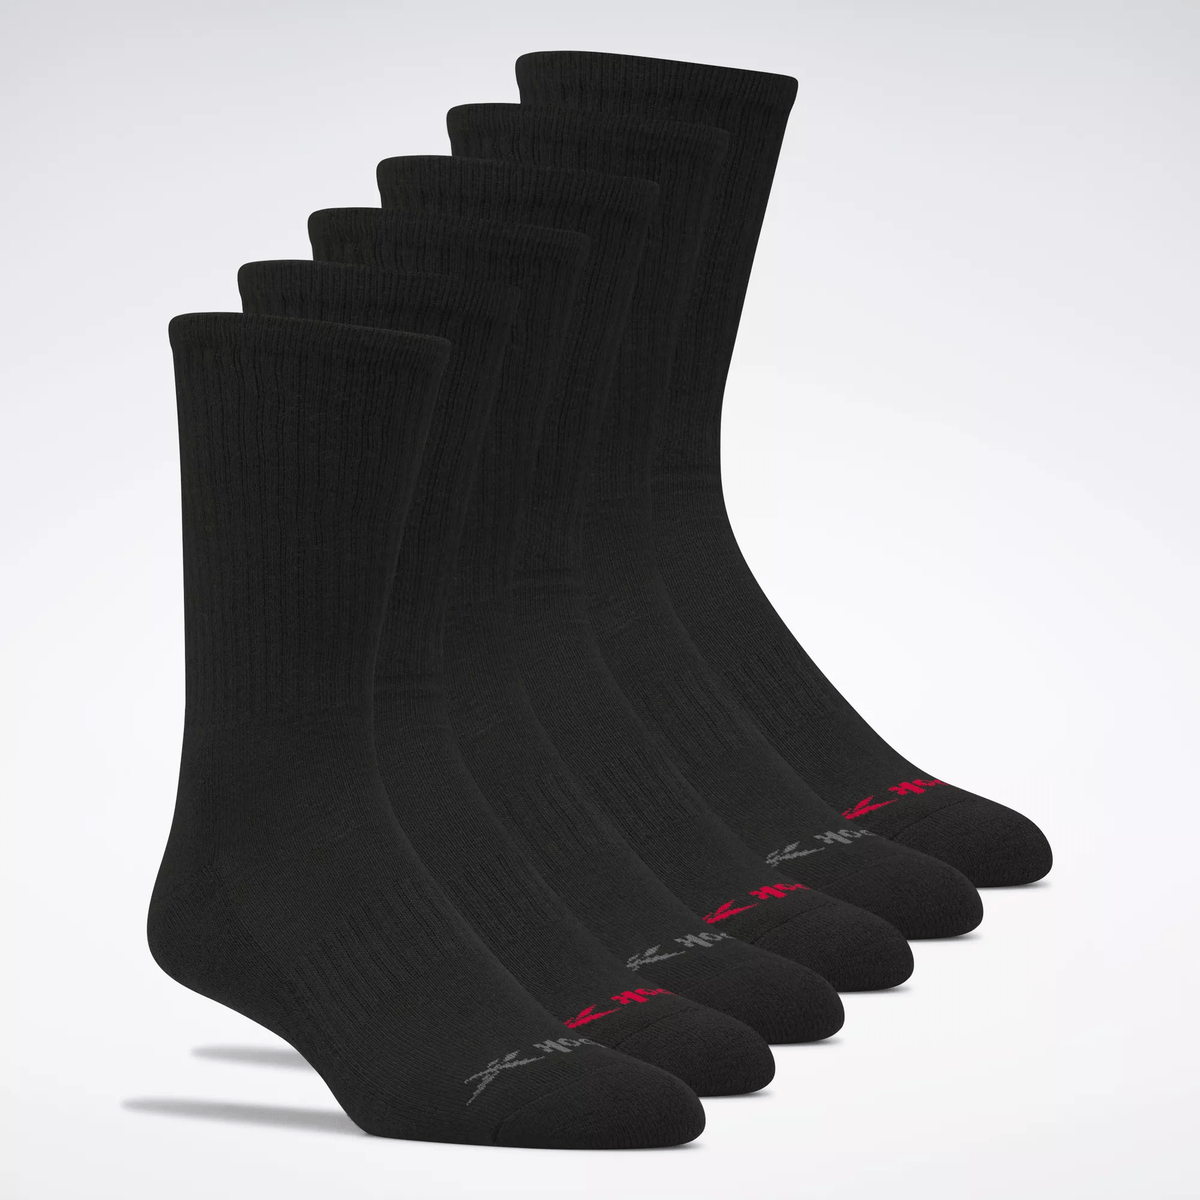 Reebok Men's Basic Crew Socks 6 Pairs Black